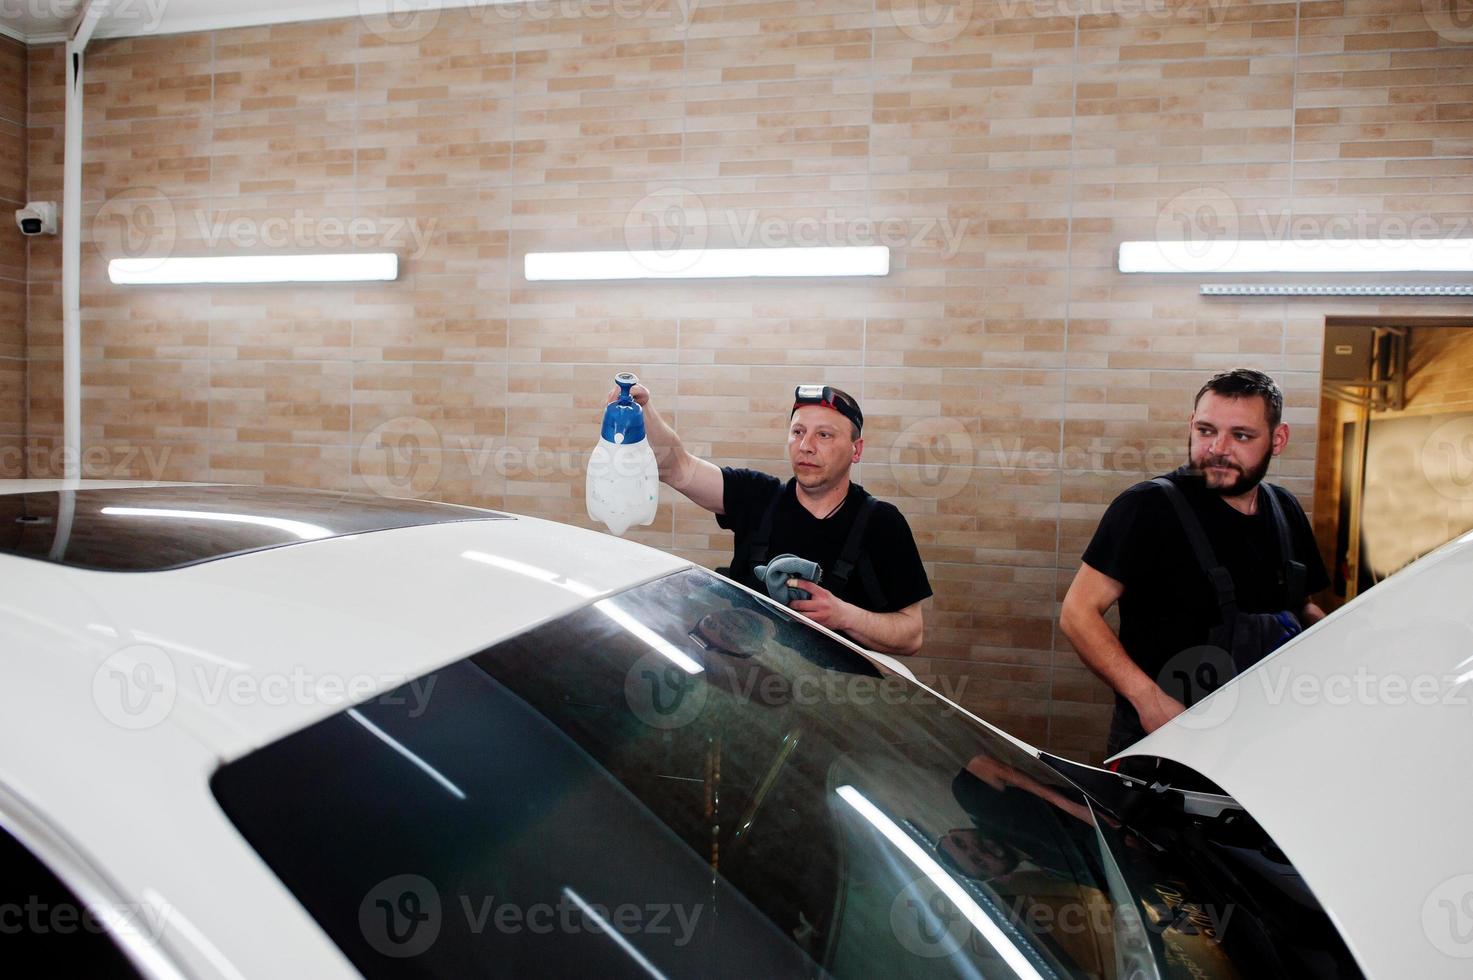 werknemer in detaillering garage plaatste polyurethaan anti-grind film hoes in witte luxe auto. foto